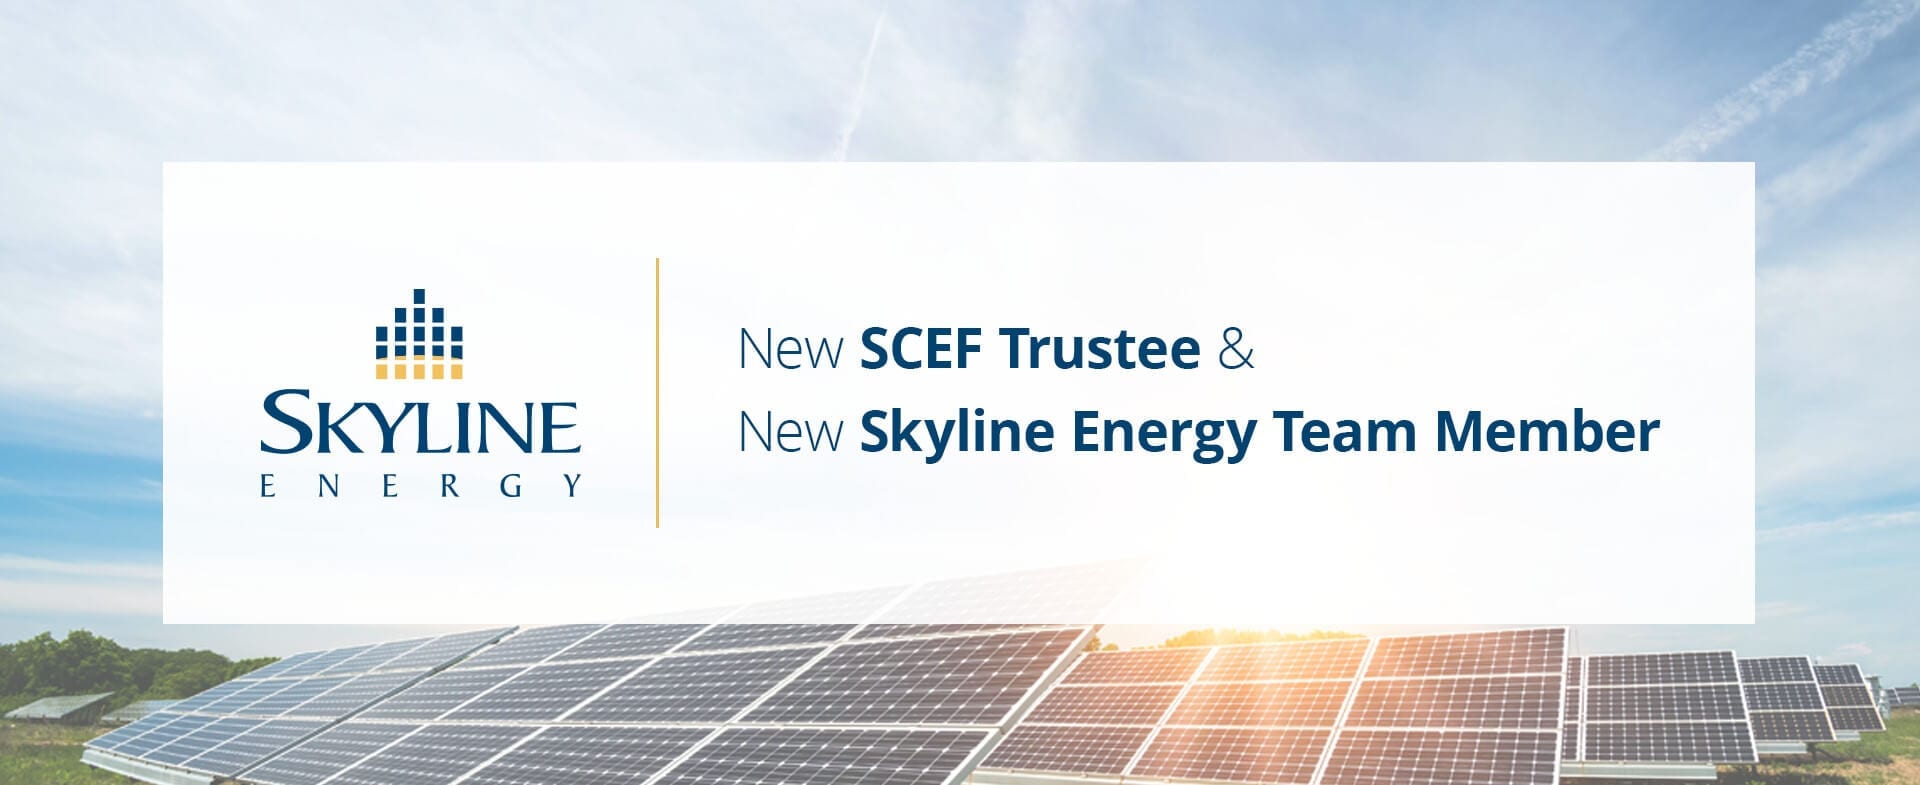 New SCEF Trustee and New Skyline Energy Team Member